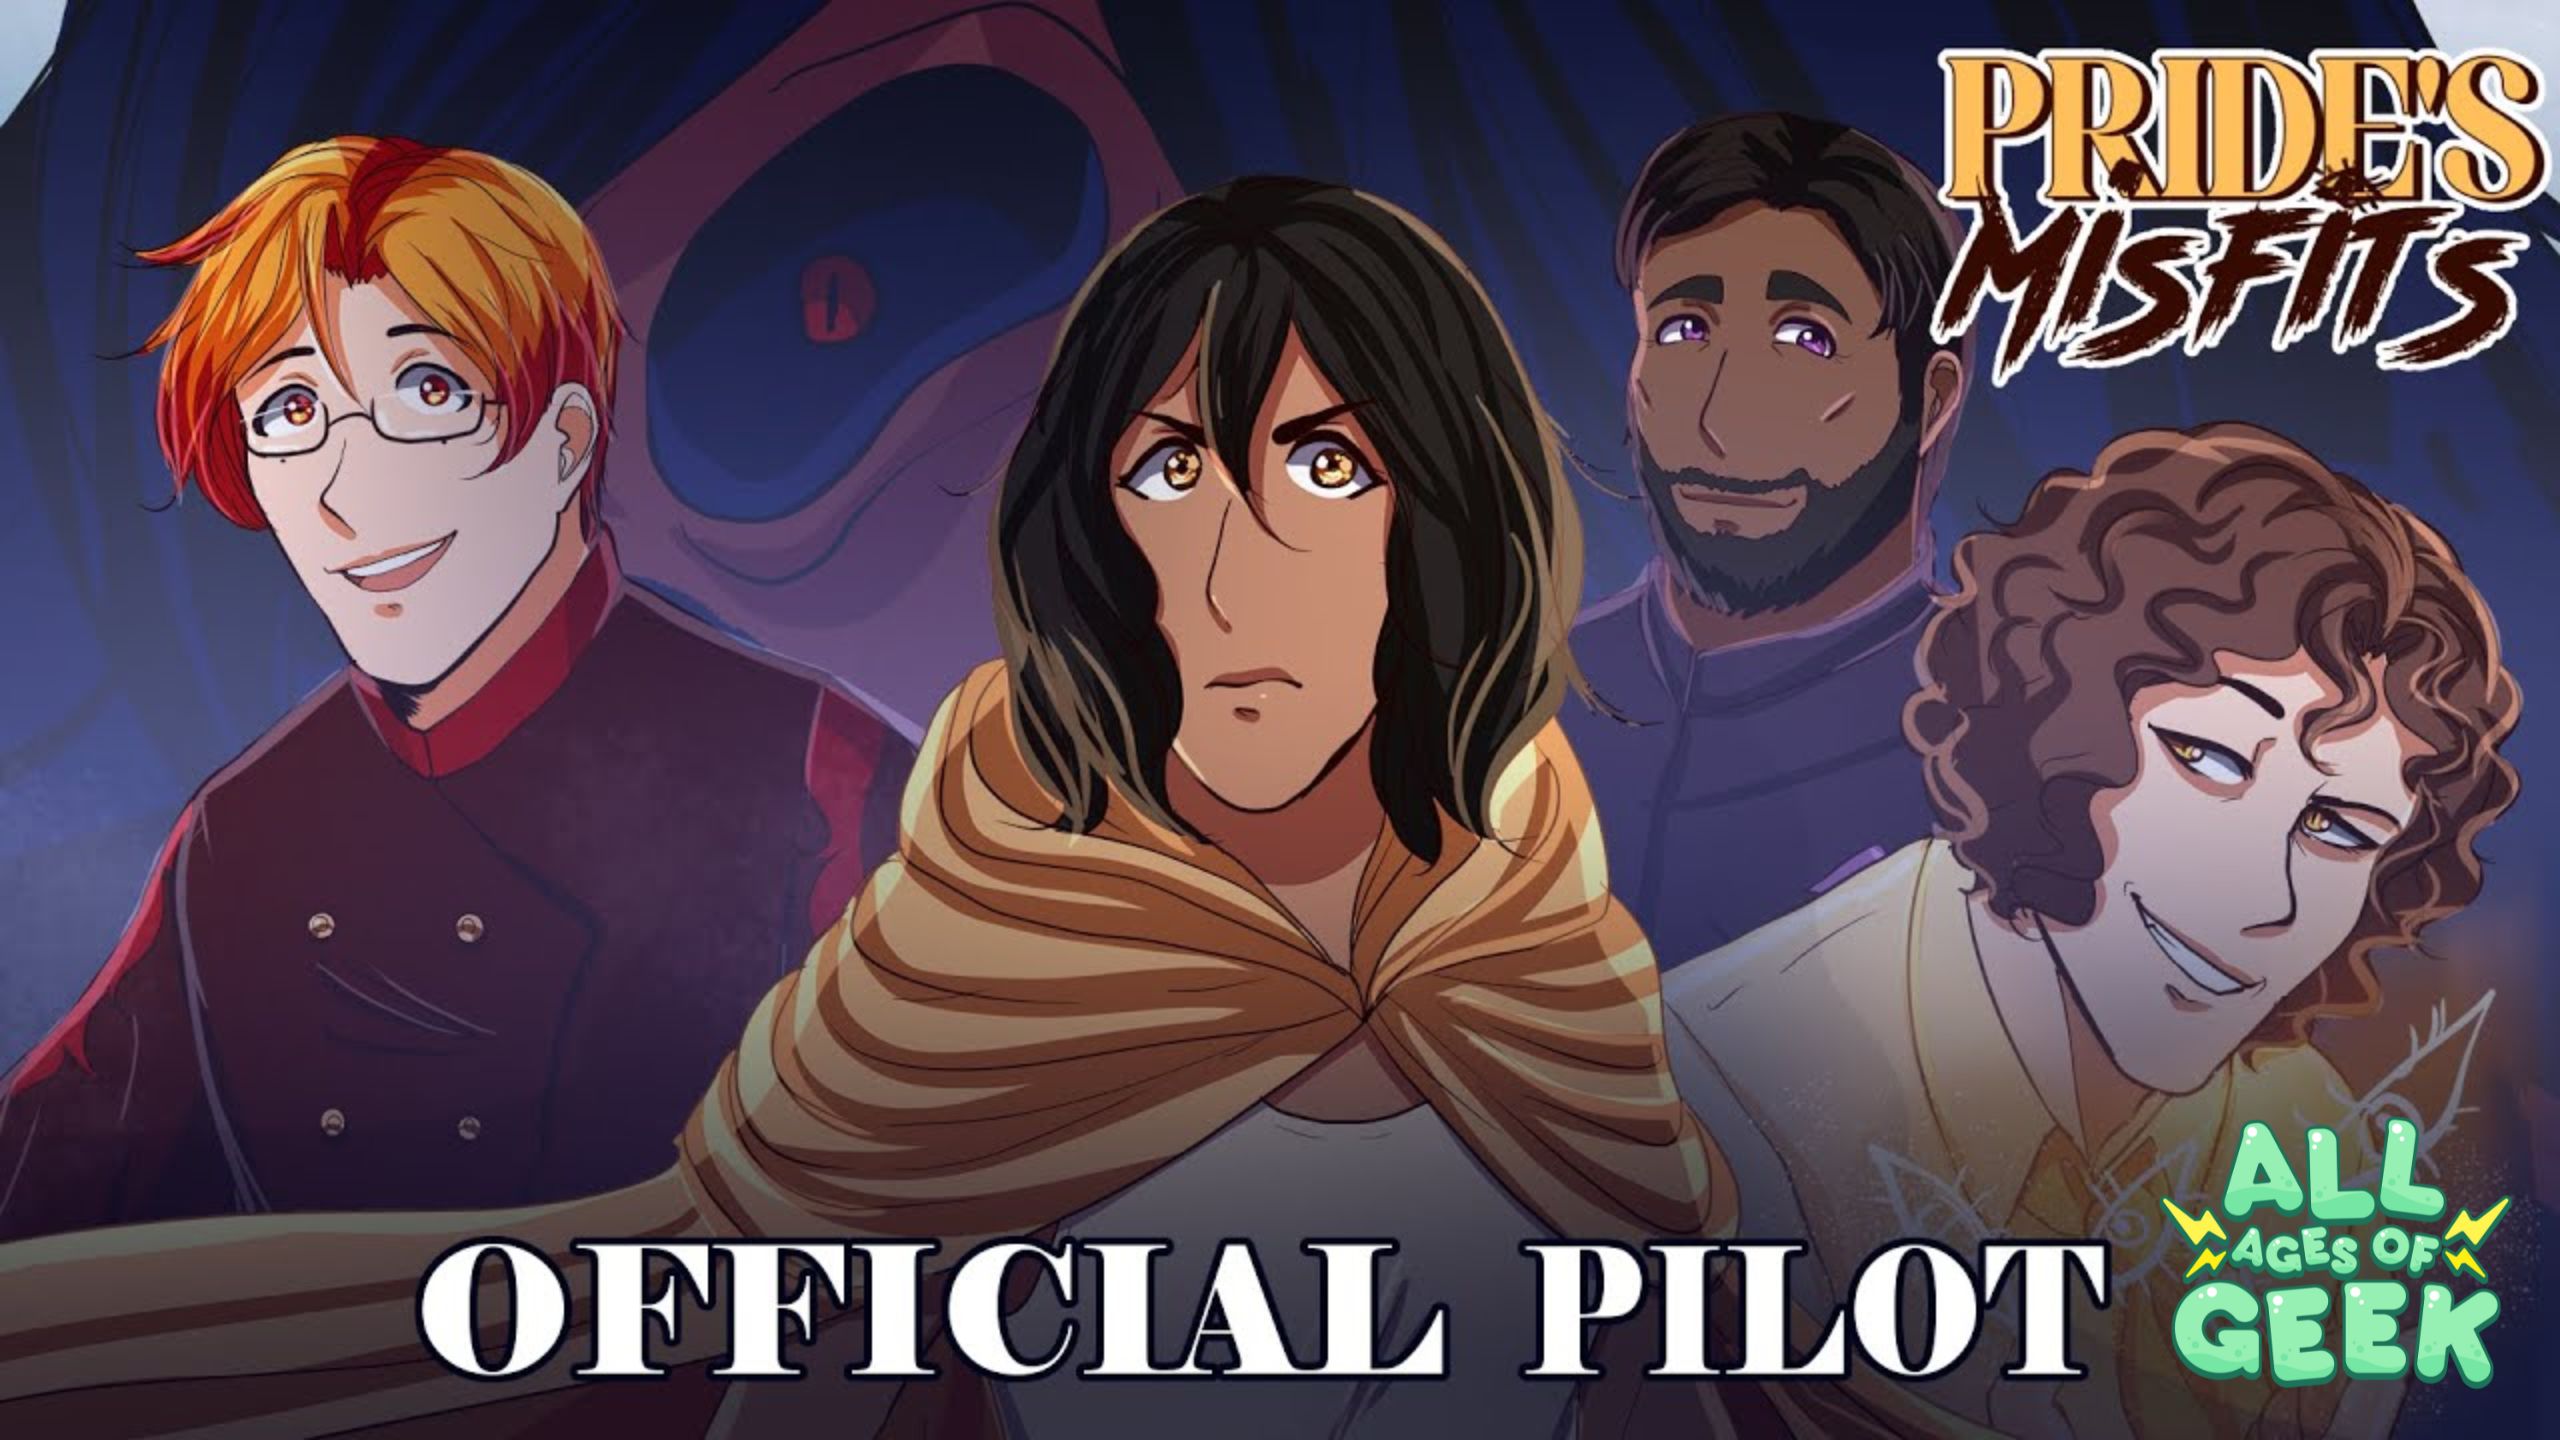 Pride’s Misfits Pilot Release!